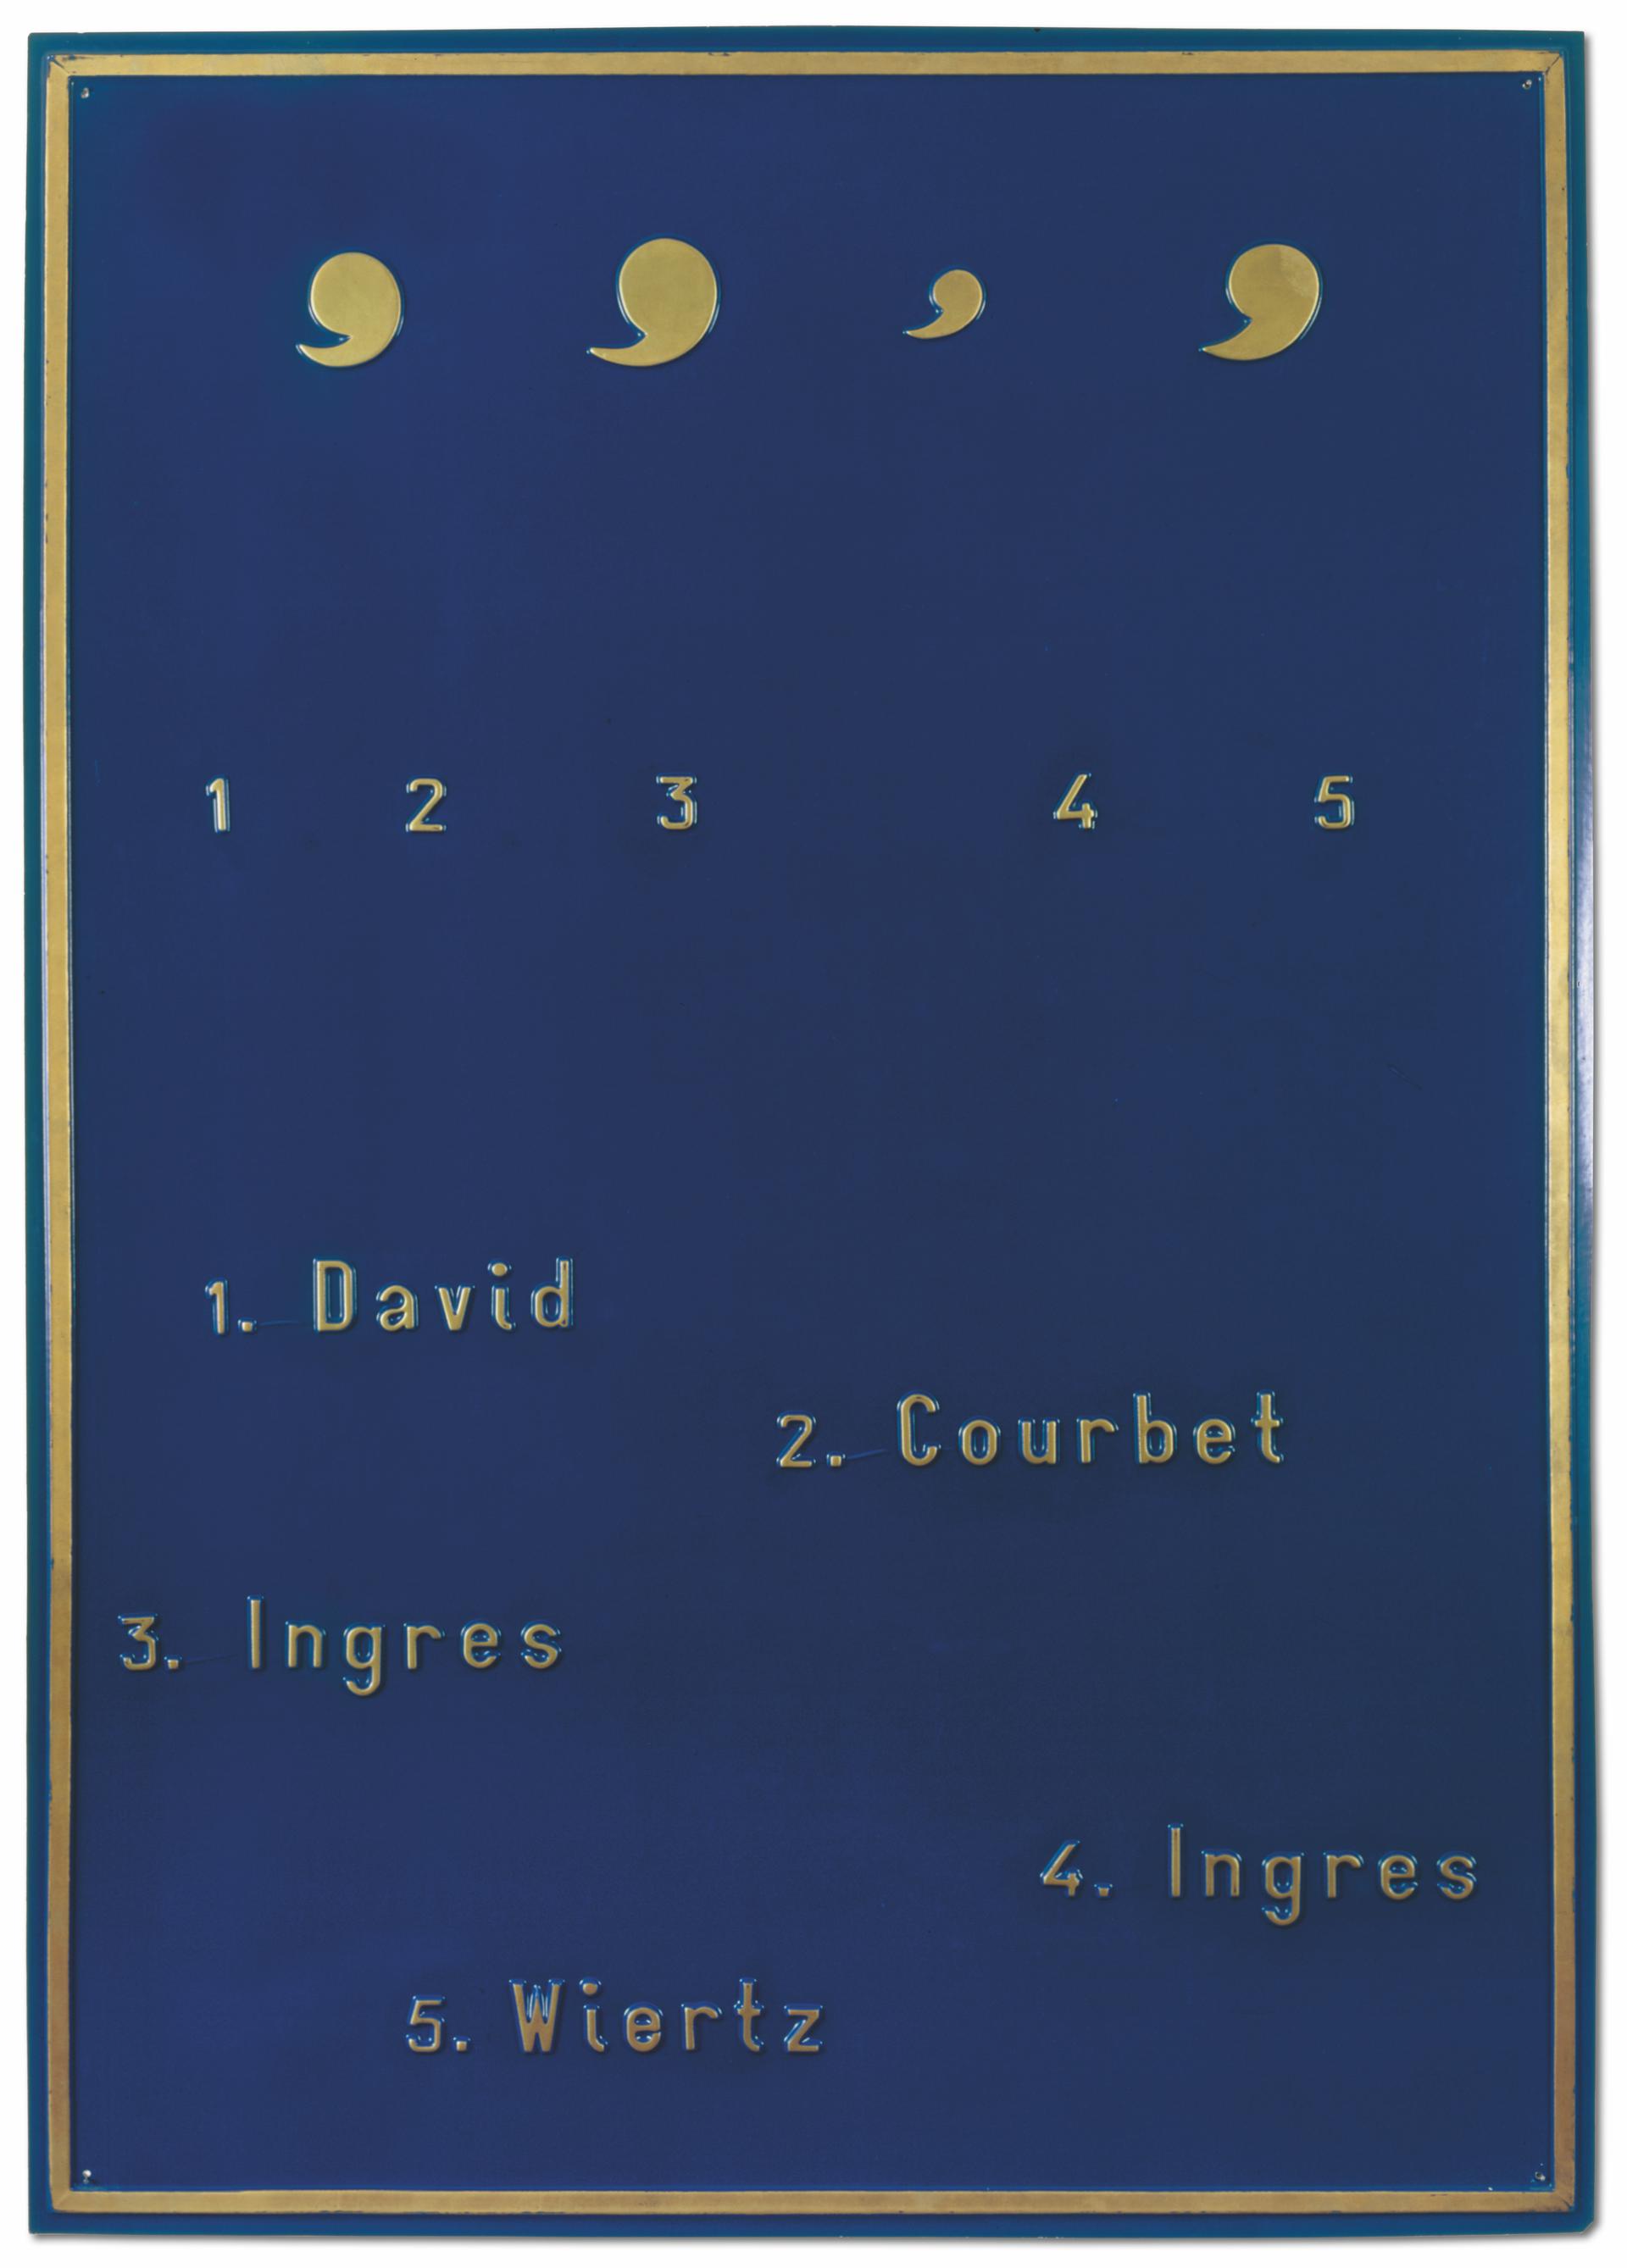 Marcel Broodthaers, 1.David 2. Courbet 3. Ingres 4. Ingres 5. Wiertz, 1971, Plastica termoformata e verniciata © Succession Marcel Broodthaers / 2022, ProLitteris, Zurich 